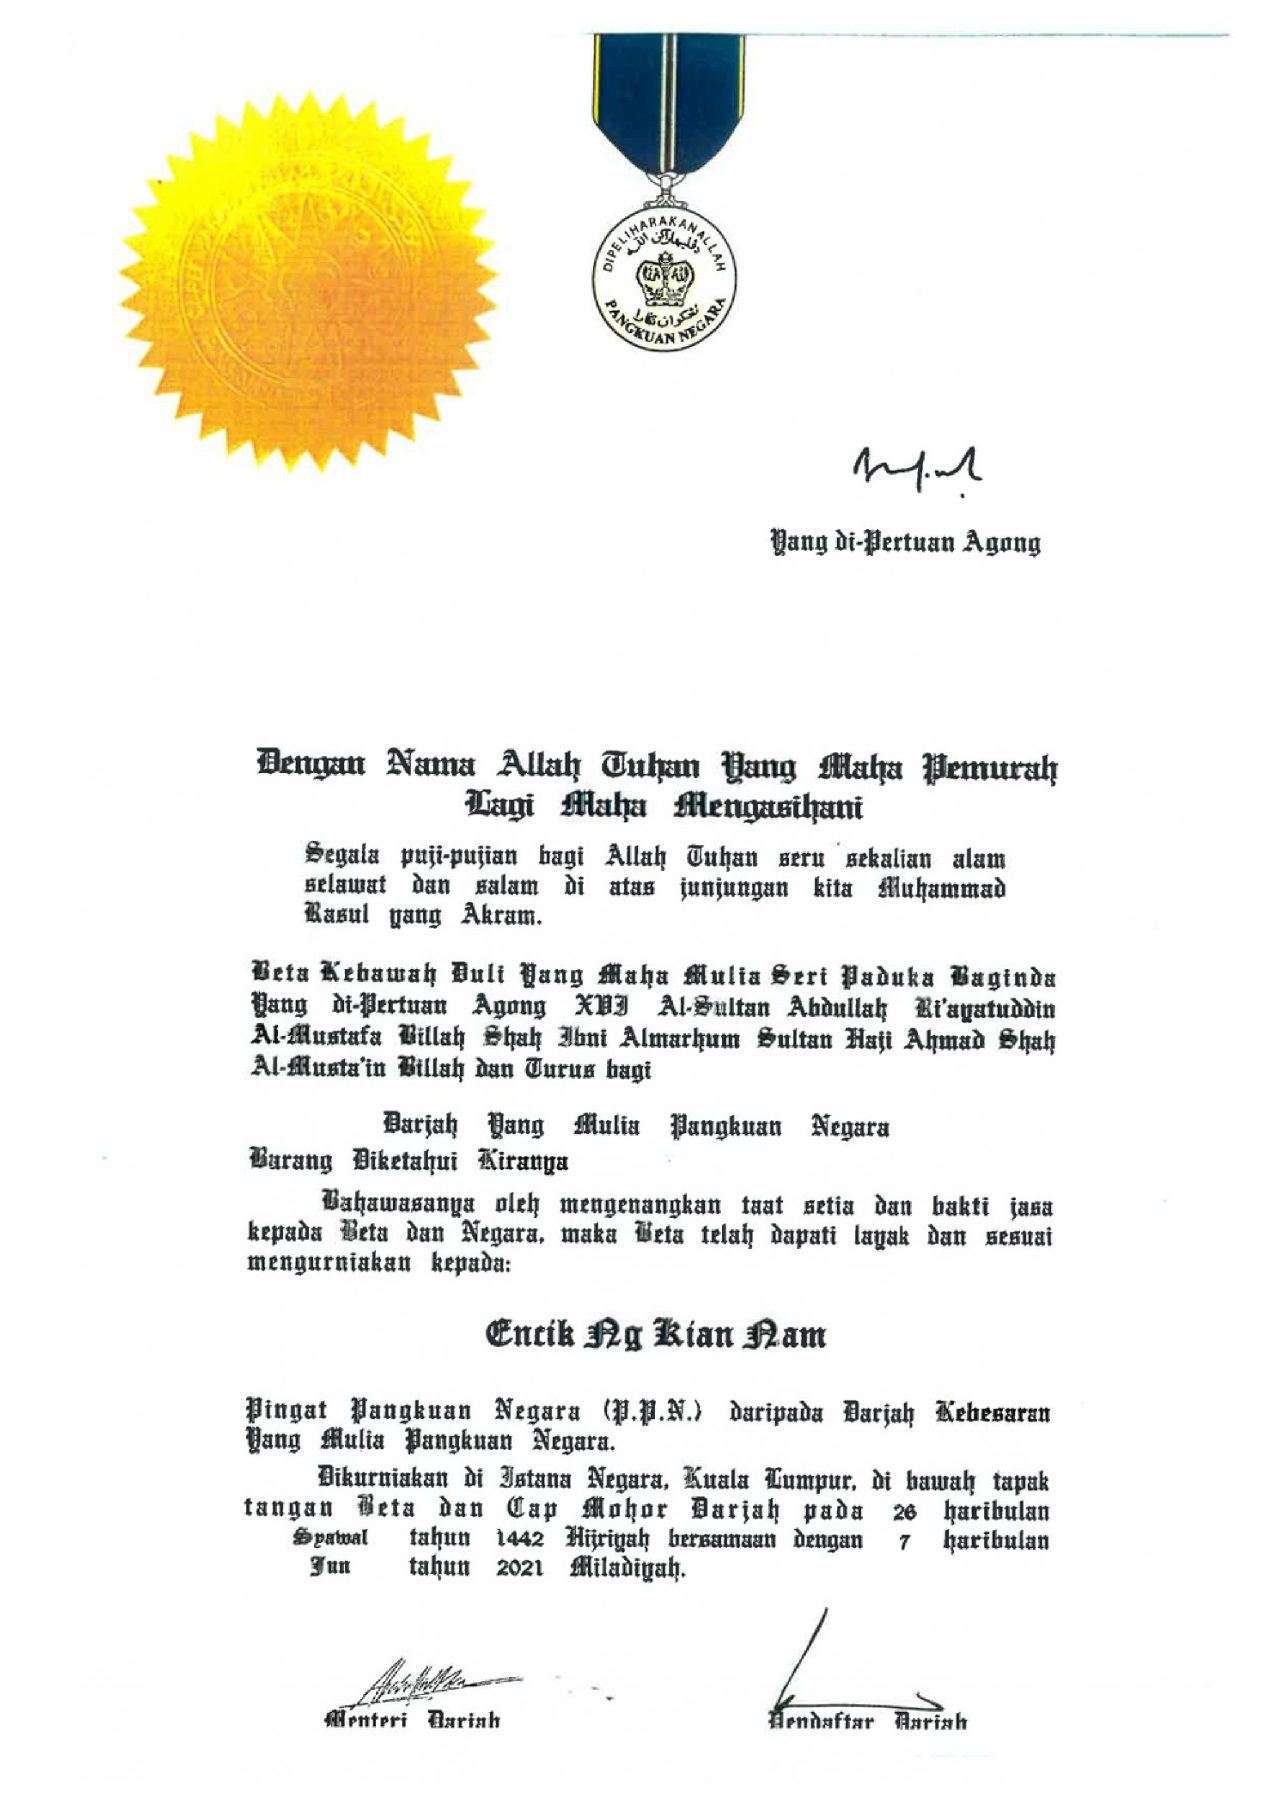 2. Certificate of Pingat Pangkuan Negara (PPN)